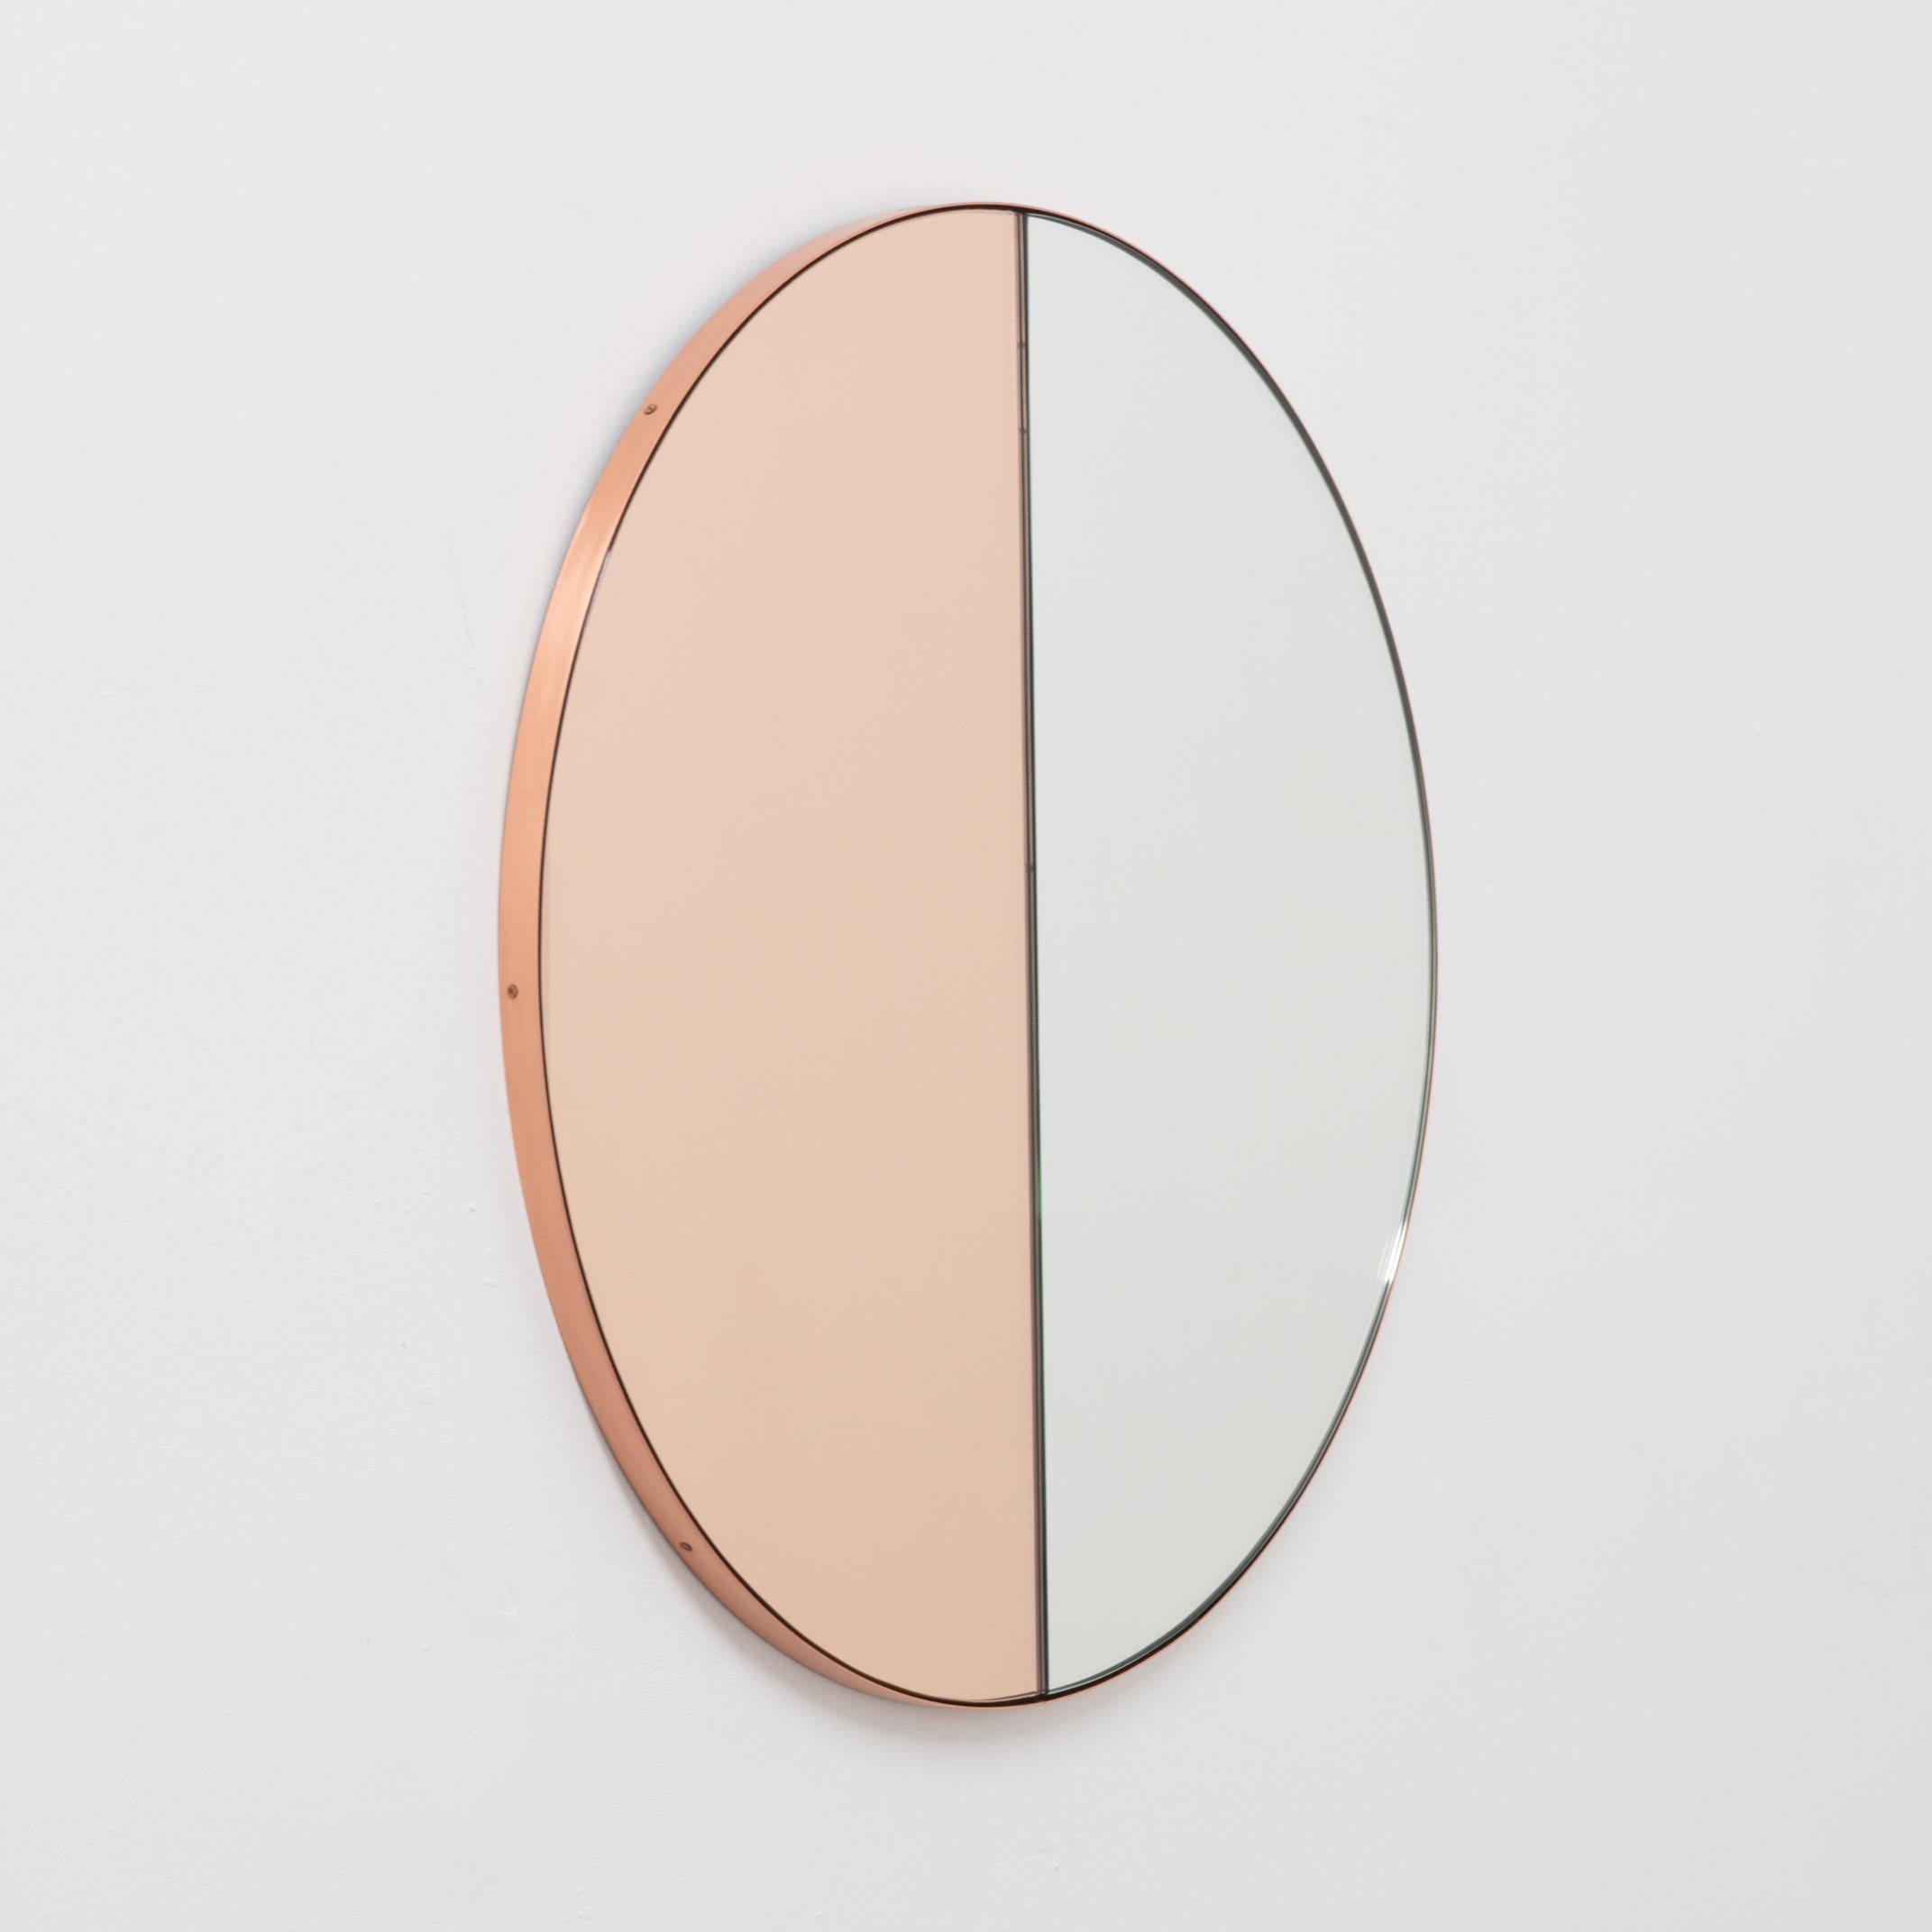 British In Stock Orbis Dualis Peach Silver Round Mirror with Copper Frame, Medium For Sale